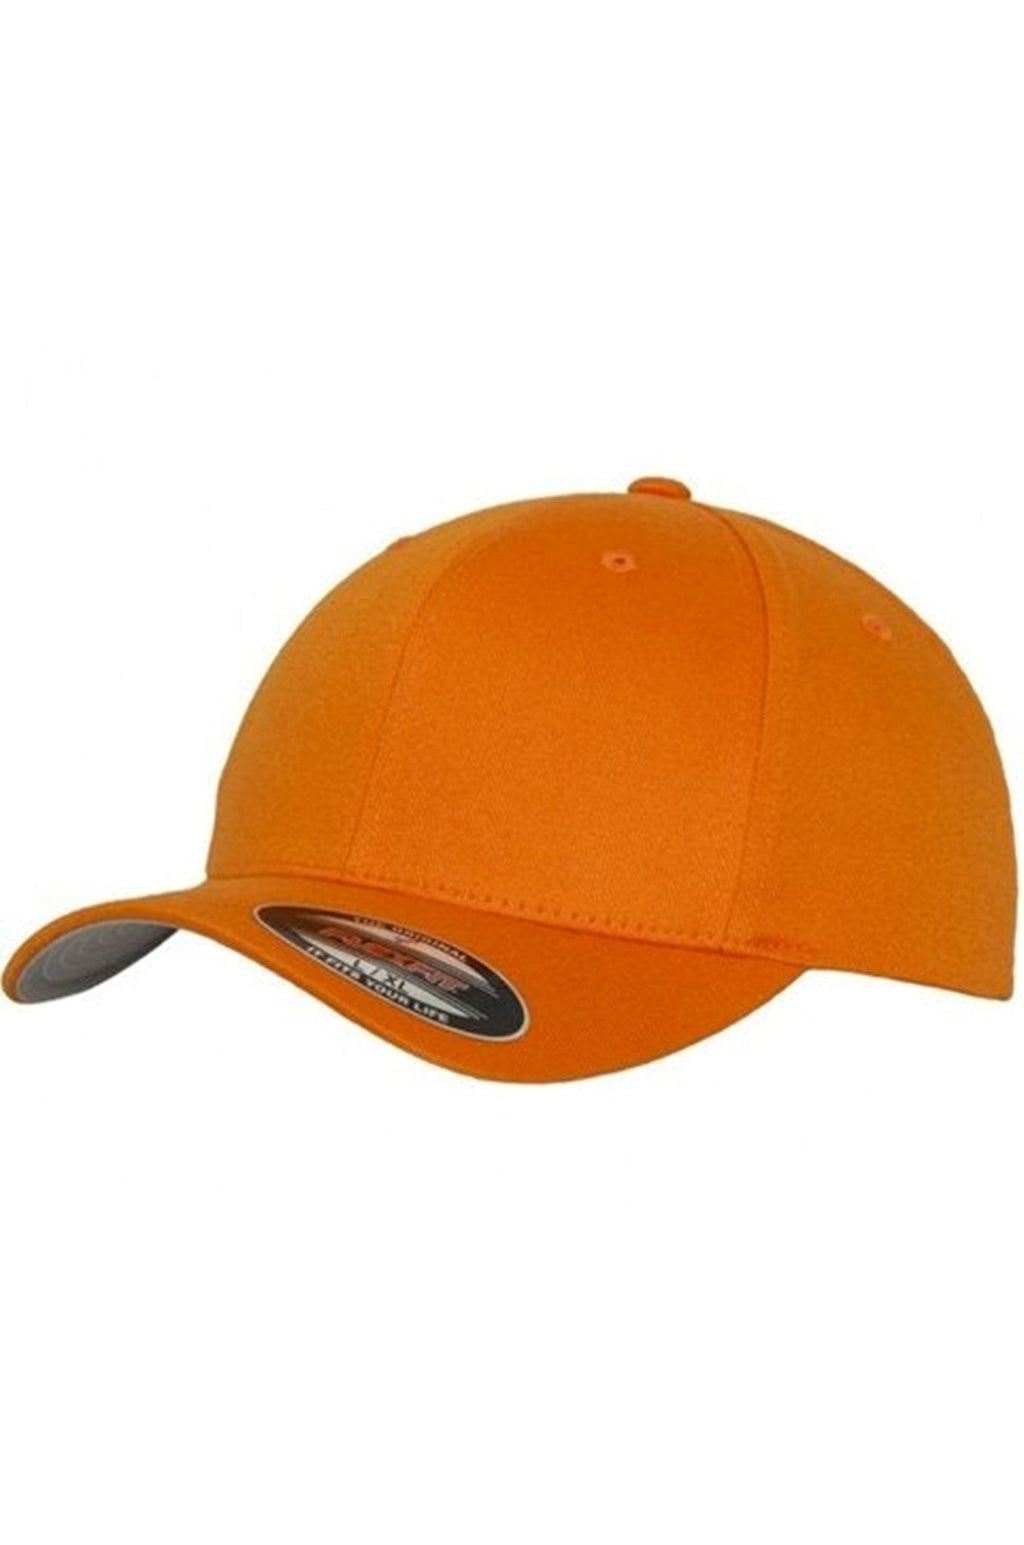 FlexFit Original Baseball Cap - Orange